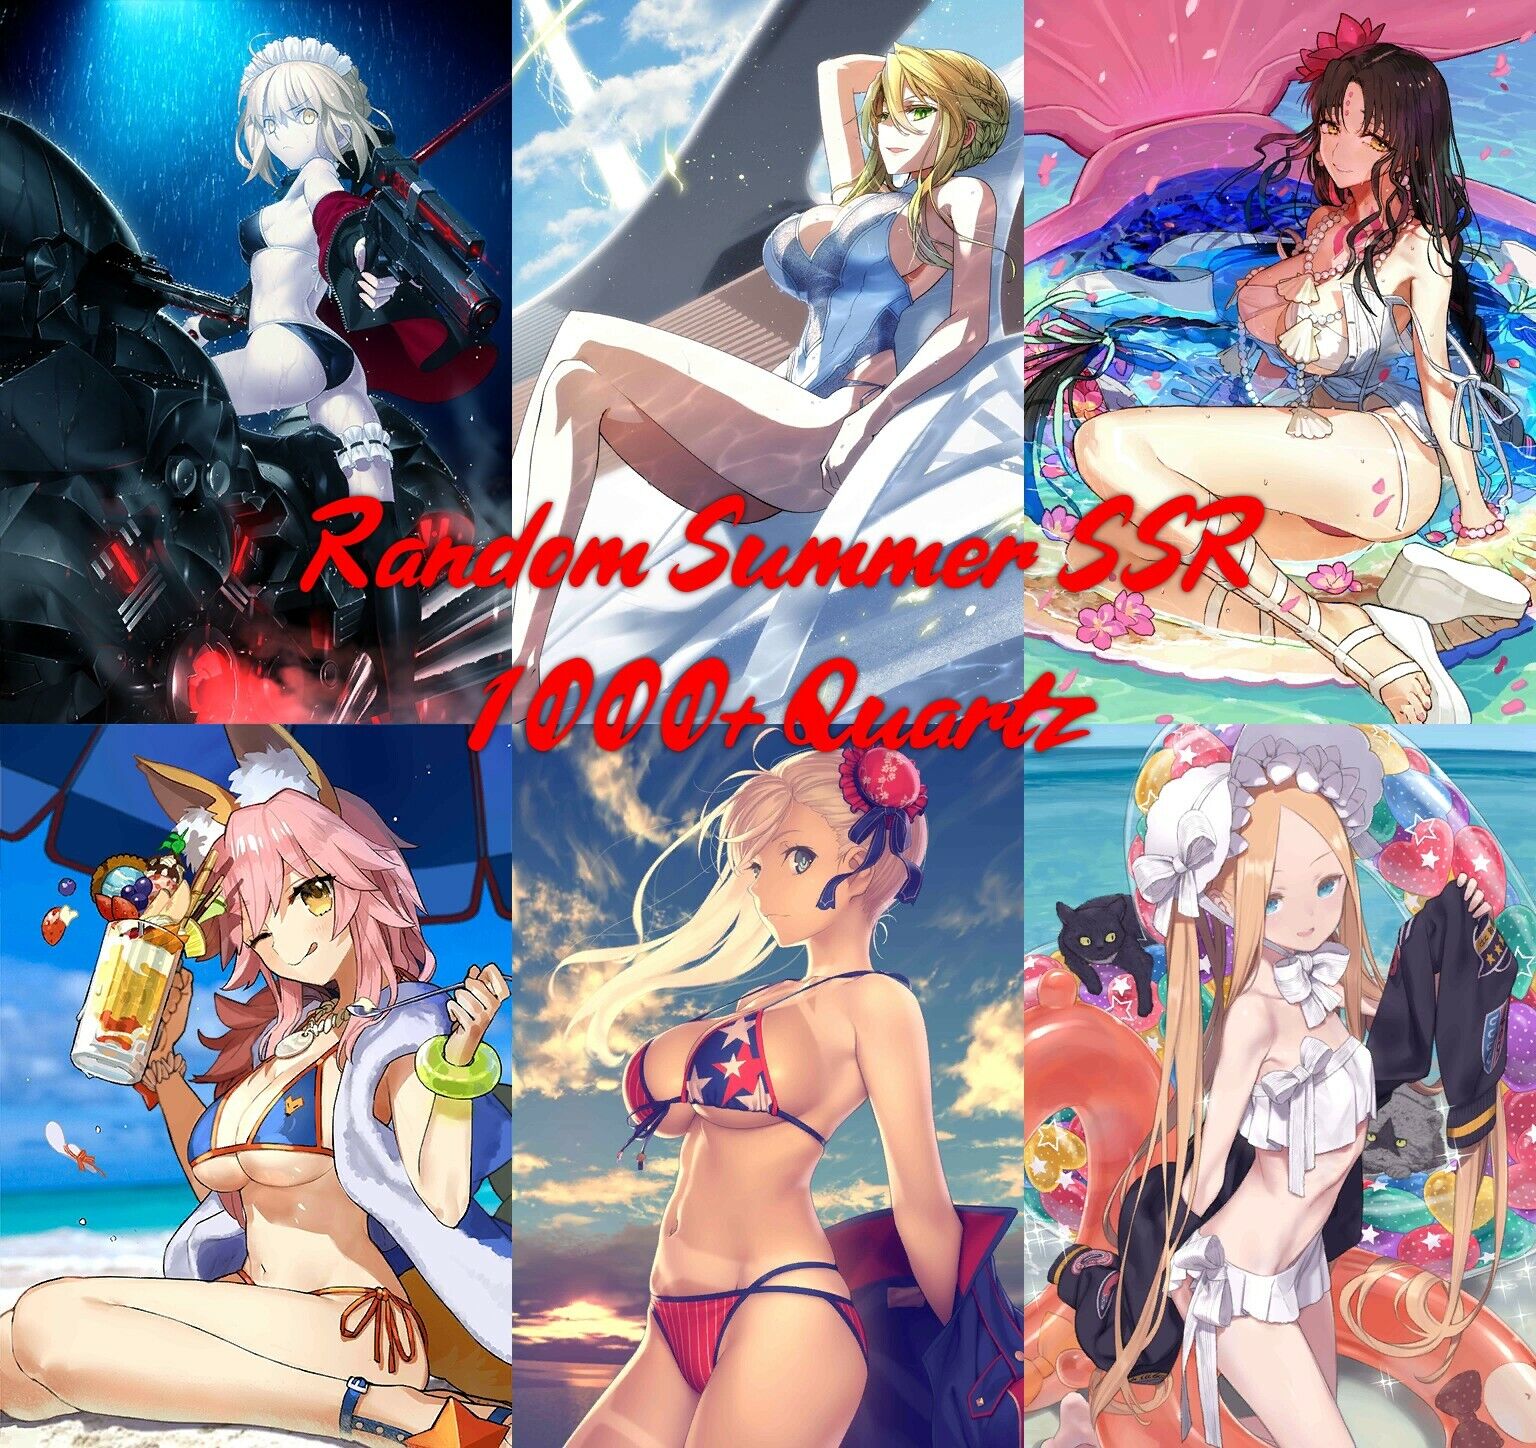 [JP] FGO Random Summer SSR Artoria Tamamo Kiara Musashi Abby 1000+Quartz Account